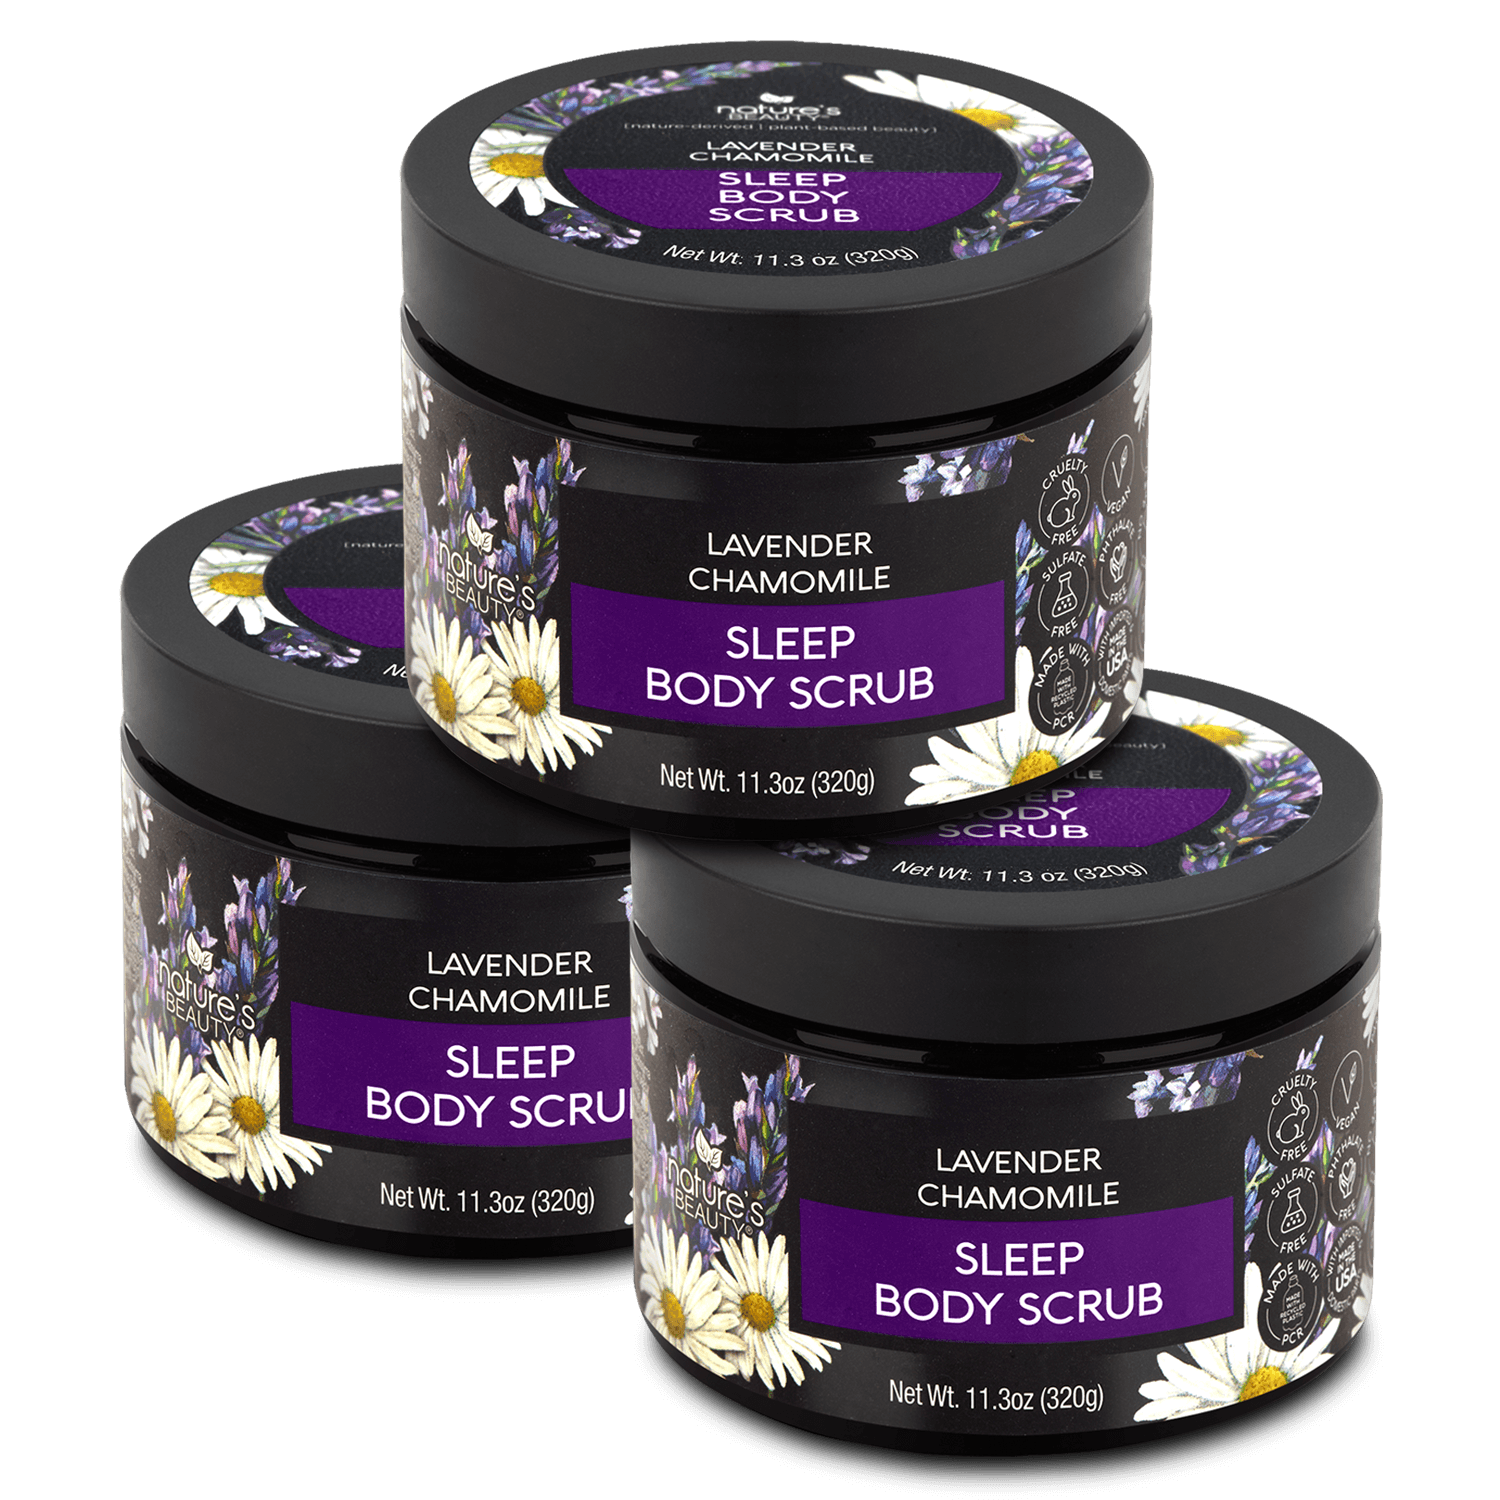 Lavender Chamomile Sleep Body Scrub Nature's Beauty Body Care Buy 2 Get 1 Free 